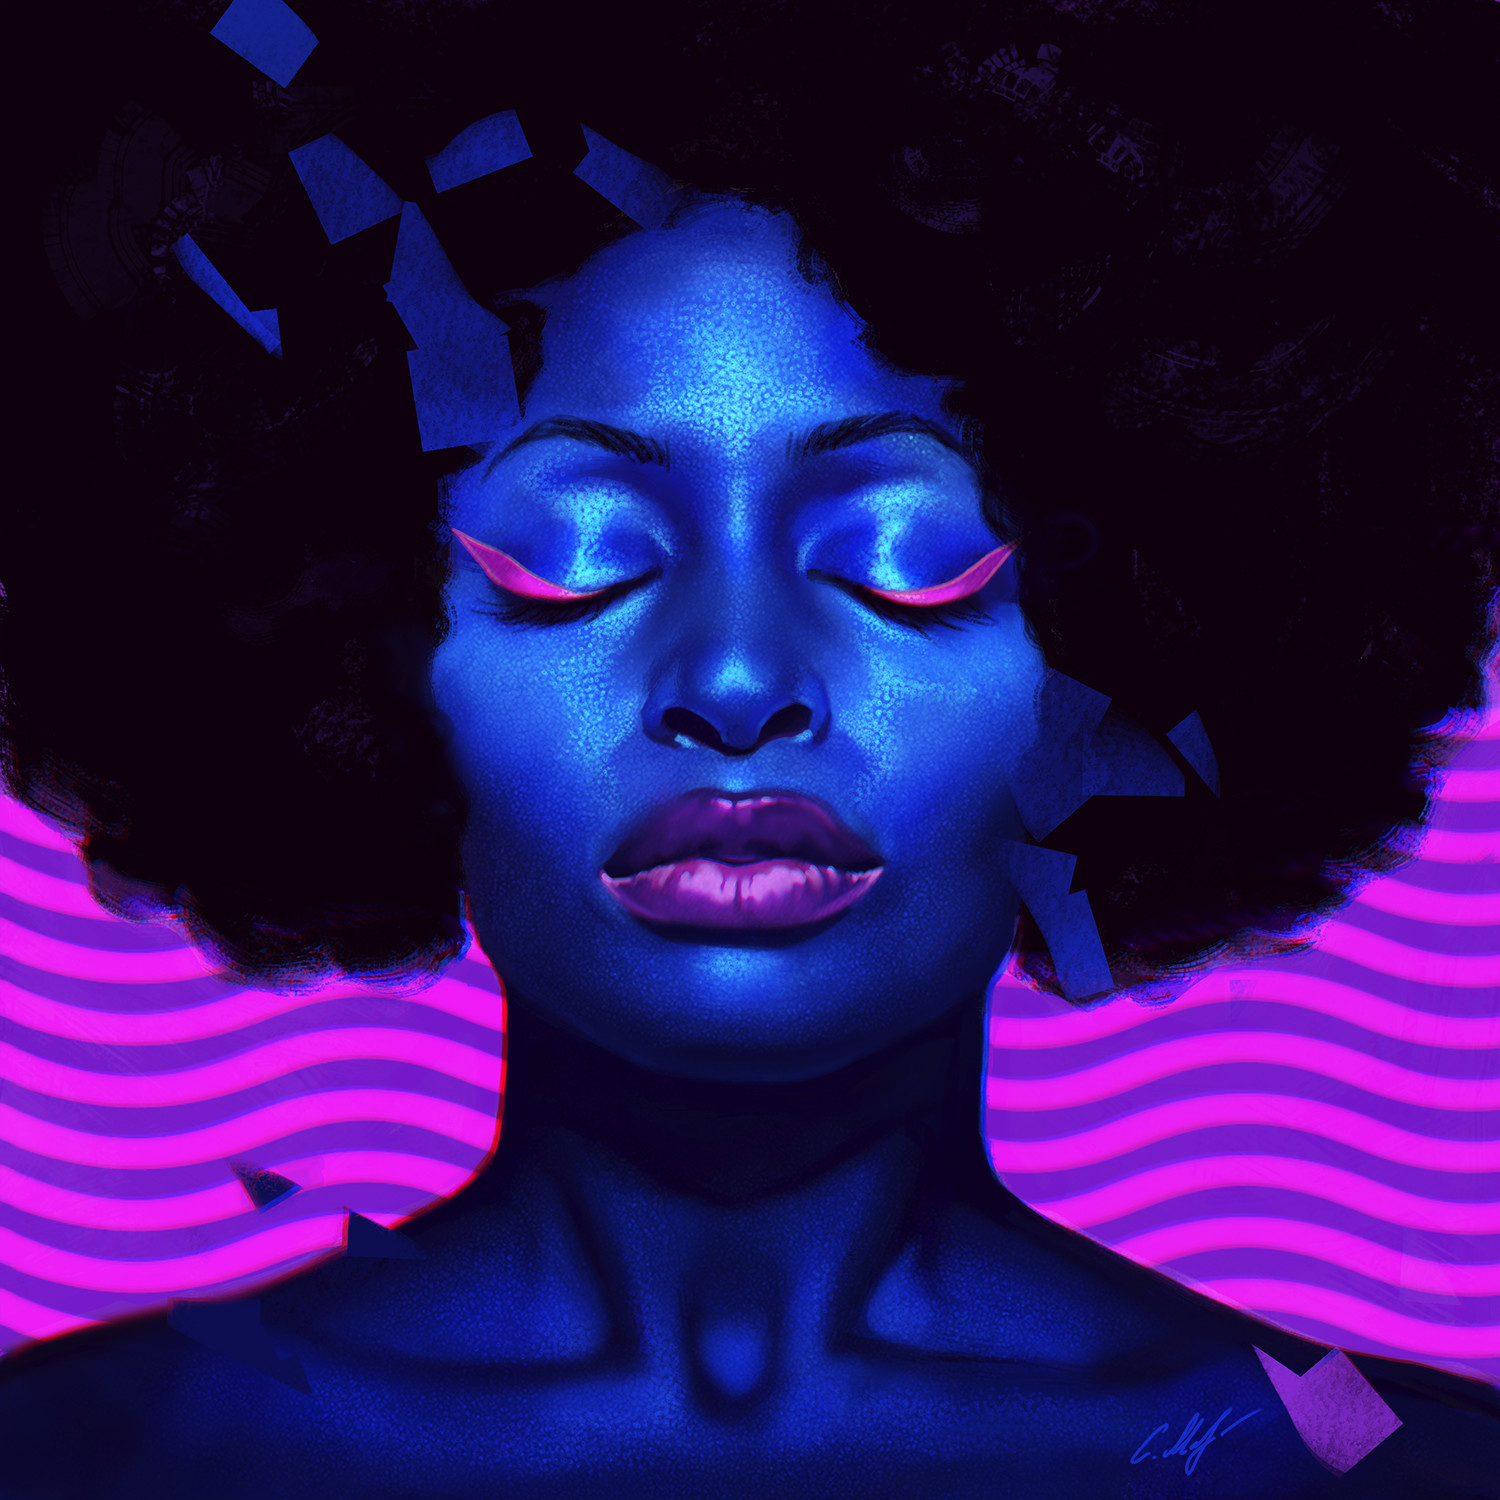 Mariia Solianyk Women Curly Hair Blue Skin Makeup Digital Art Closed Eyes Afro Frontal View Portrait 1500x1500